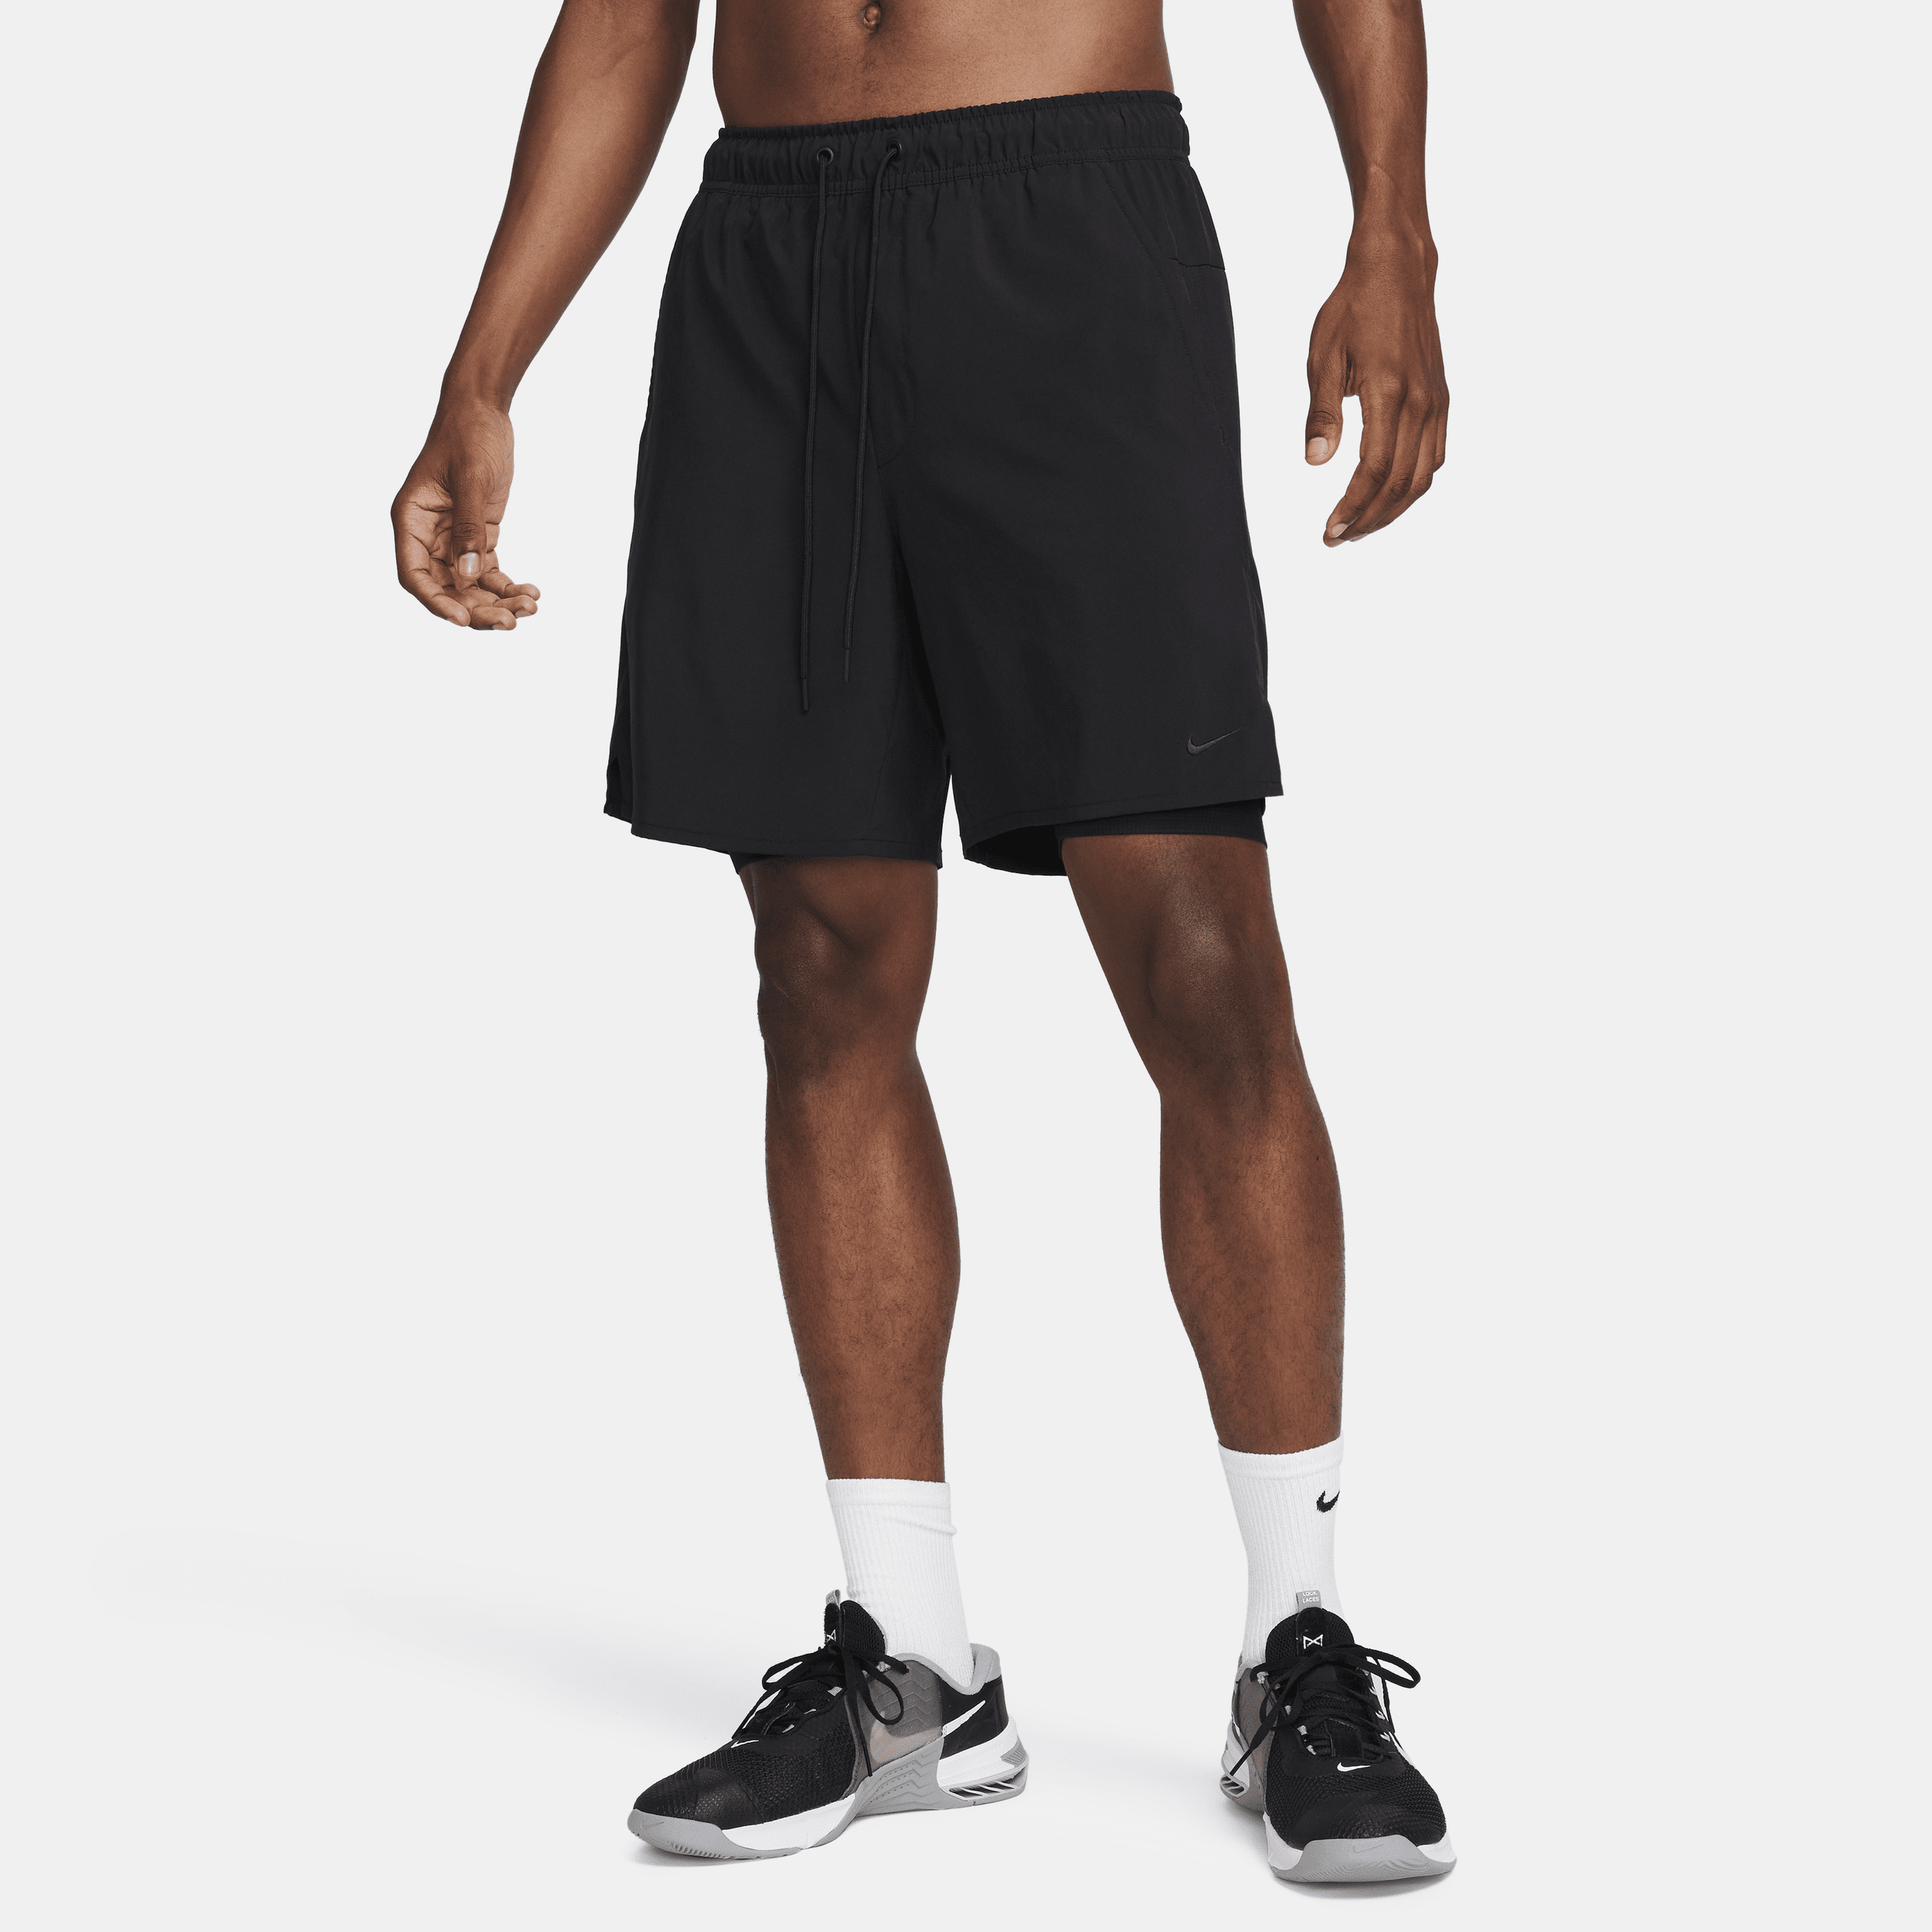 Nike Unlimited Pantalón corto versátil Dri-FIT 2 en 1 de 18 cm - Hombre - Negro